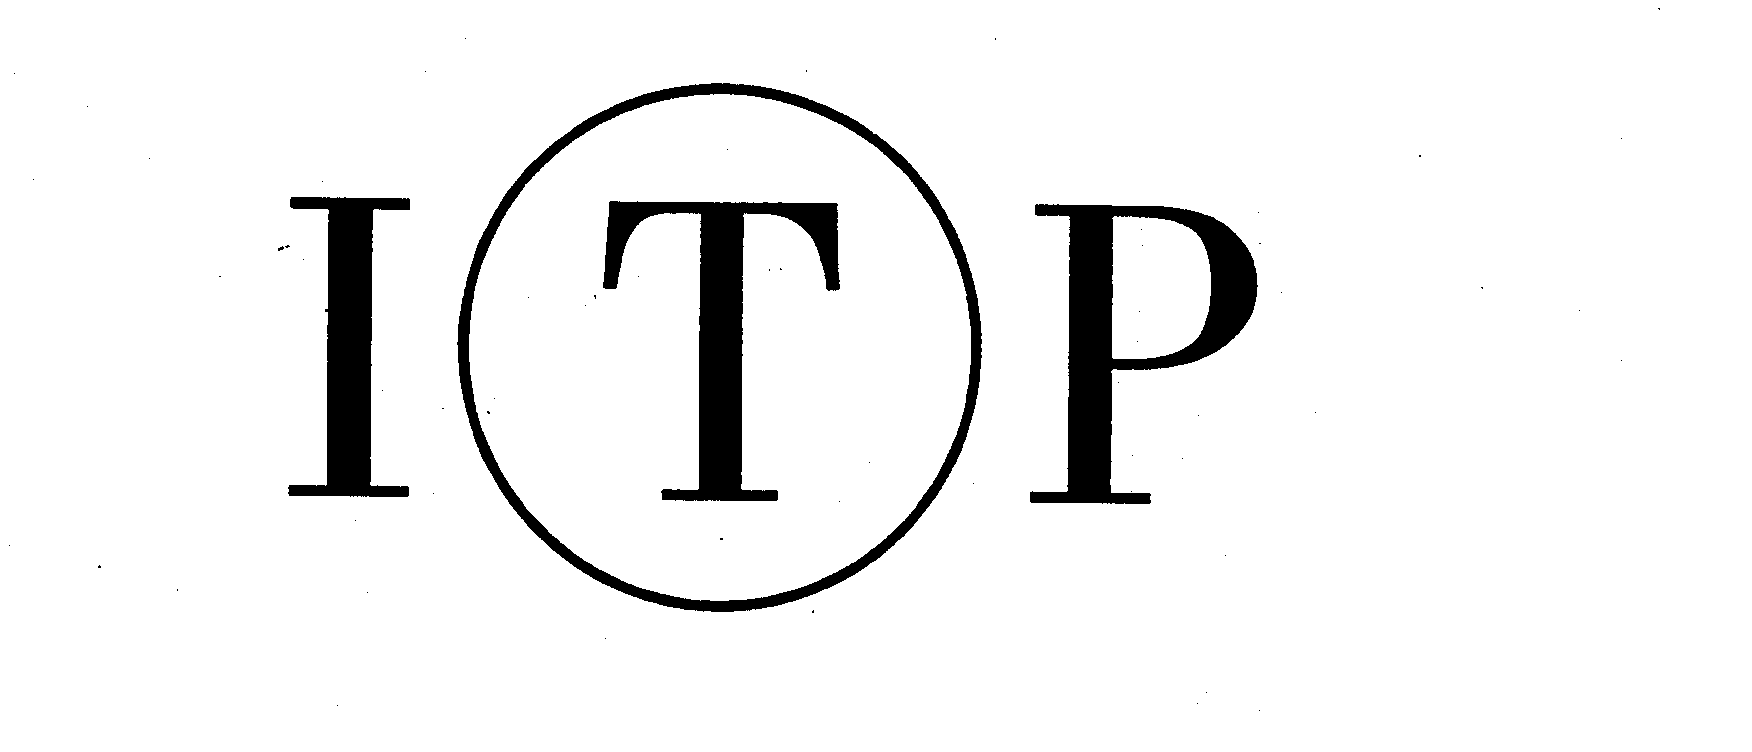 ITP